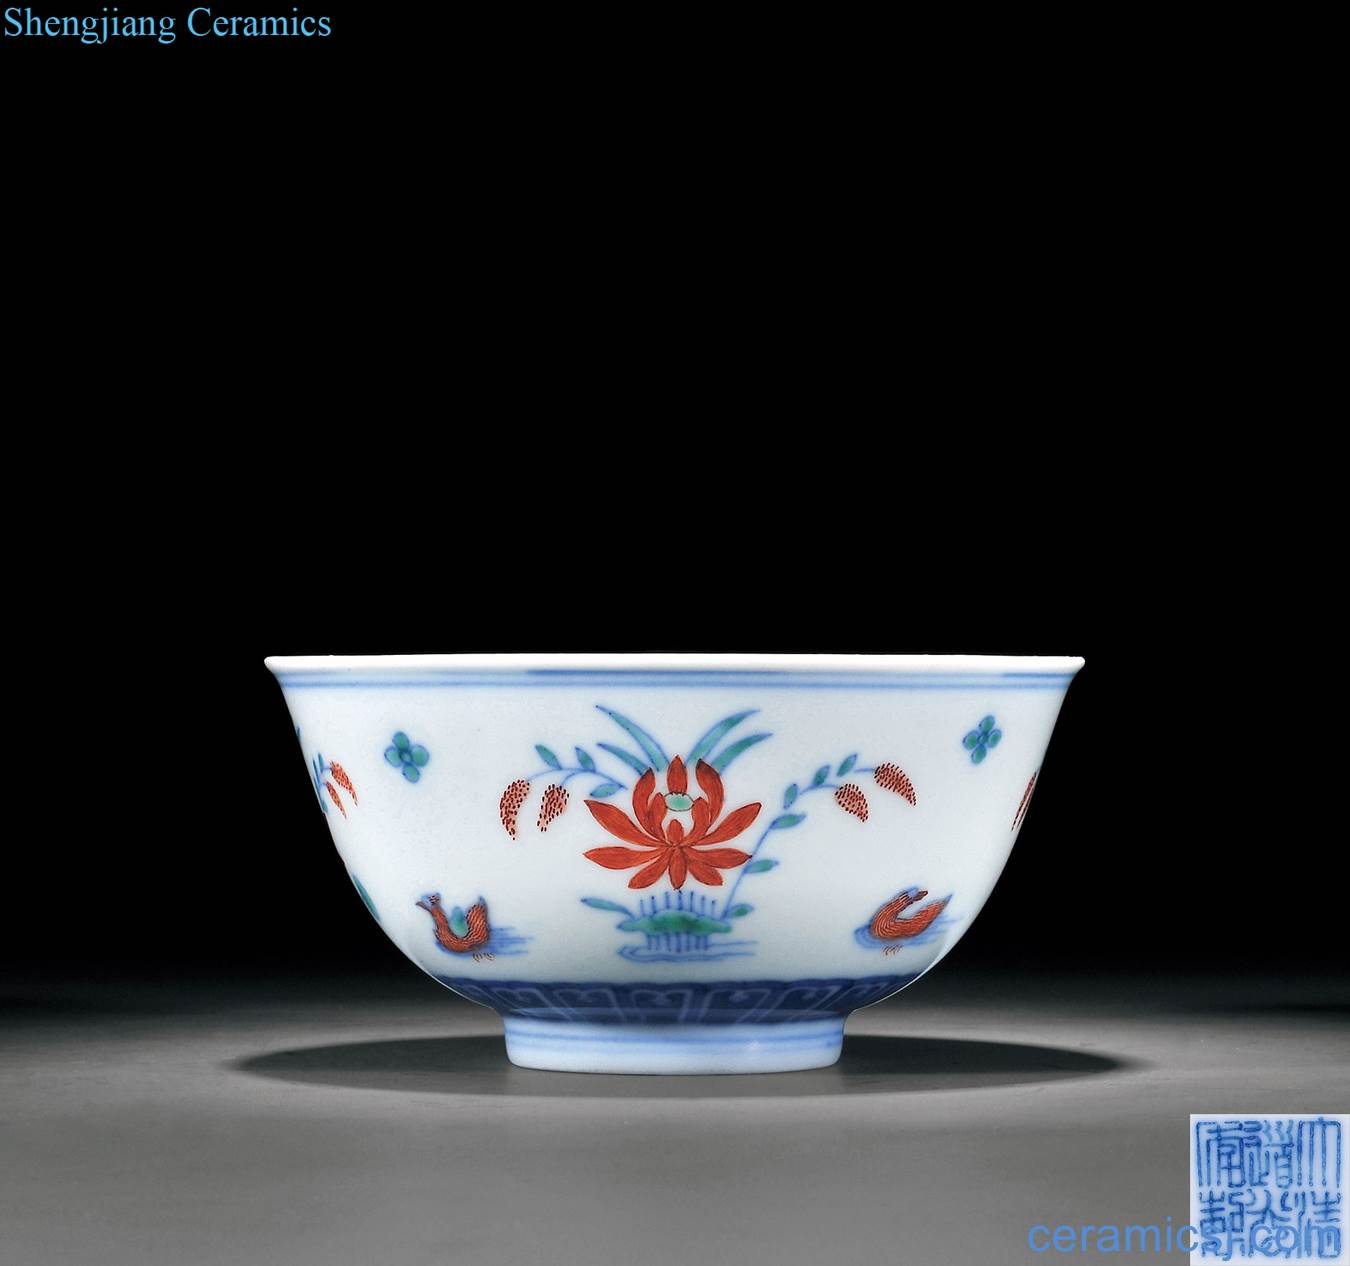 Qing daoguang imitation chenghua bucket color lotus pond yuanyang figure small bowl